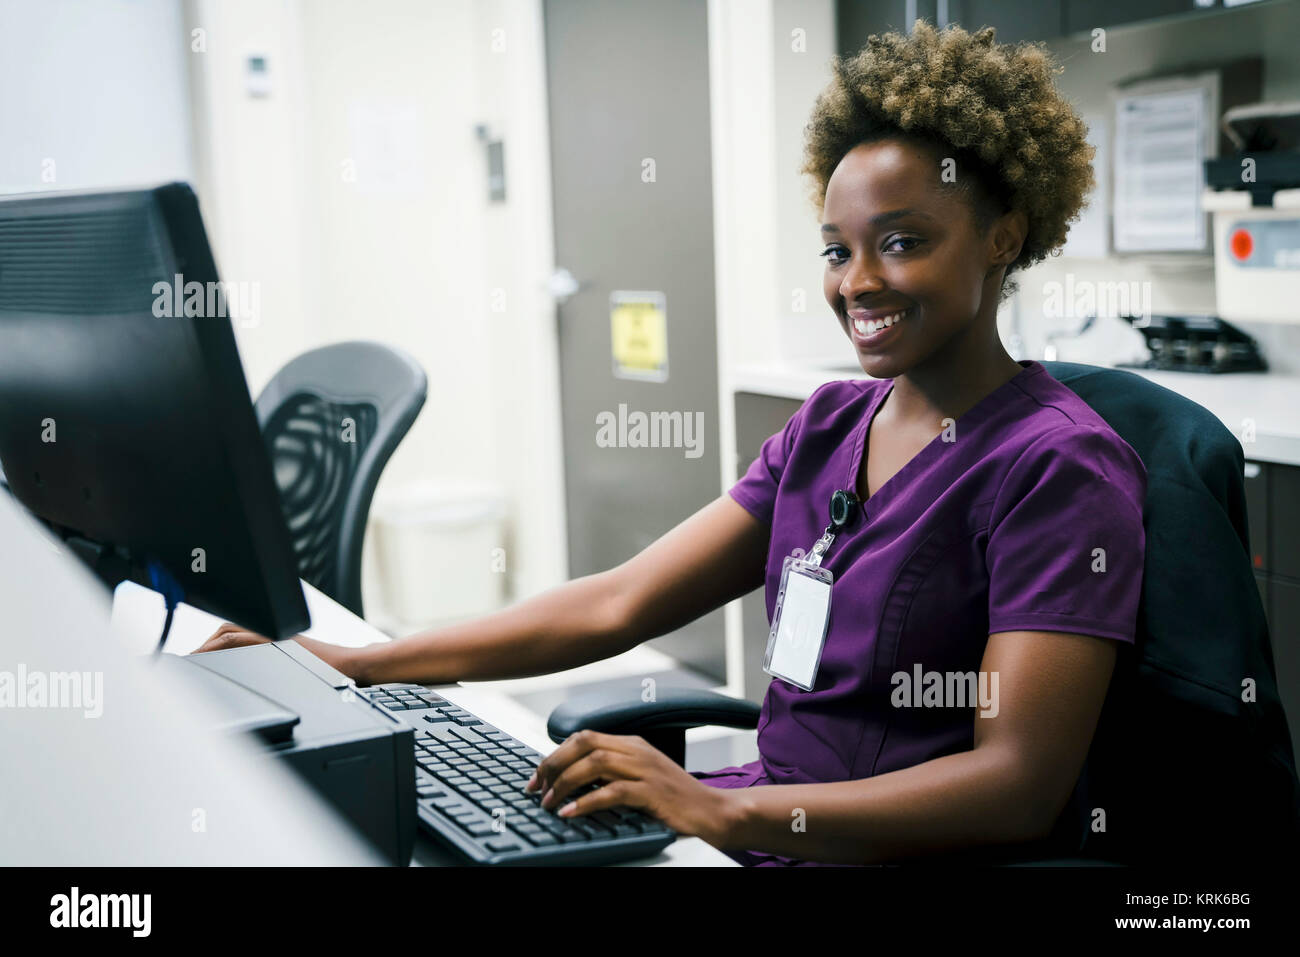 Portrait of smiling black nurse using computer Stock Photo